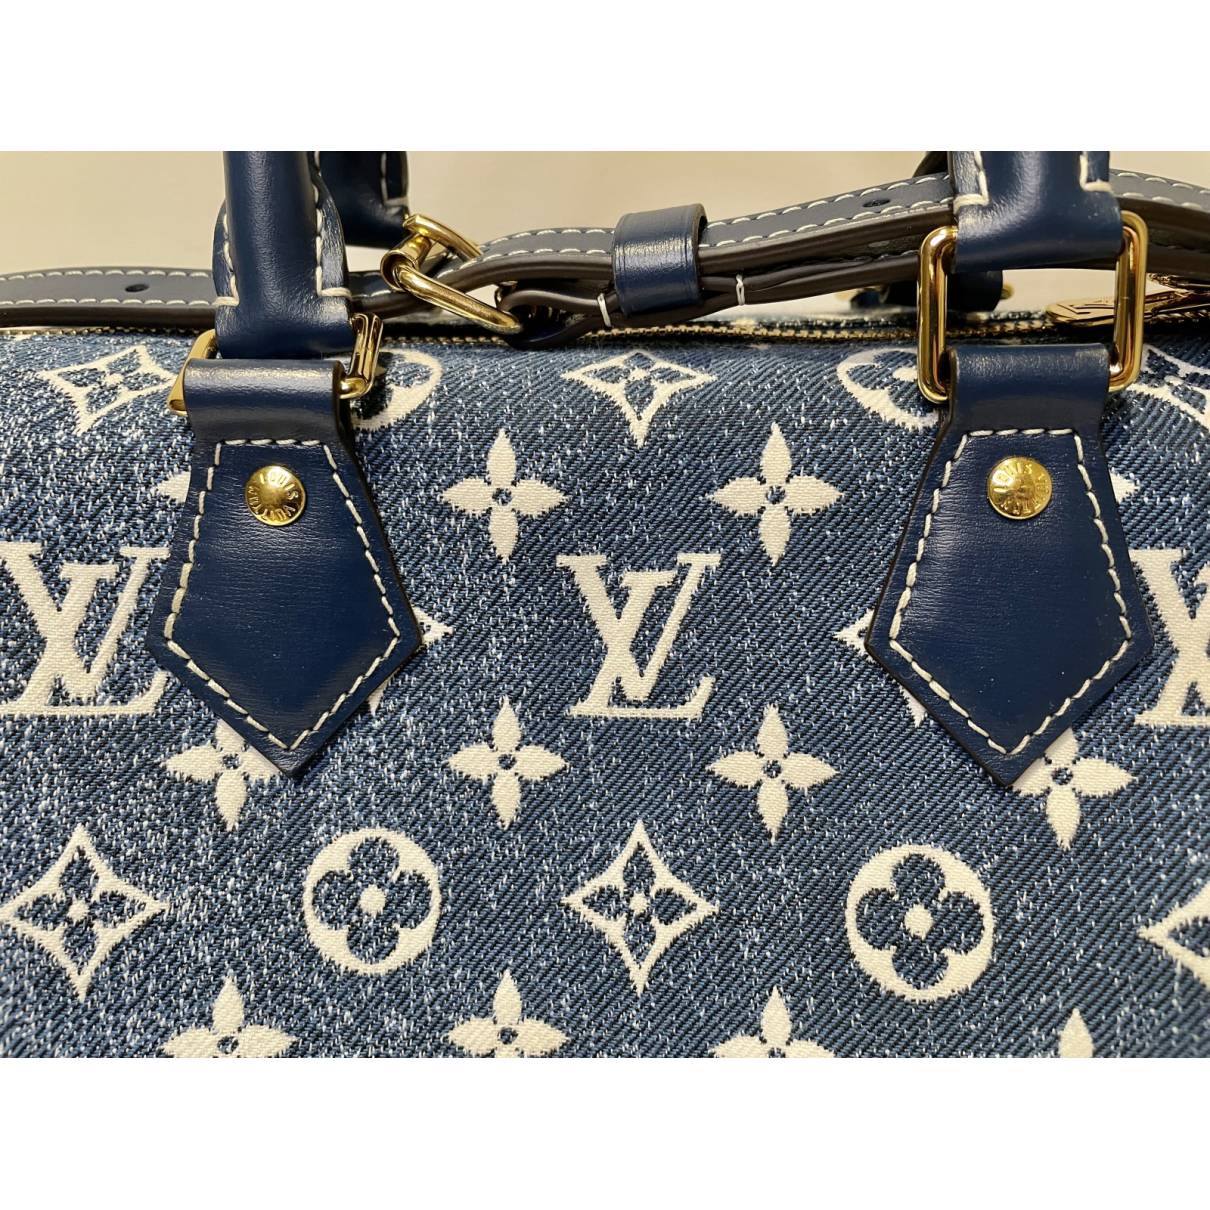 Speedy bandoulière handbag Louis Vuitton Blue in Denim - Jeans - 30325813